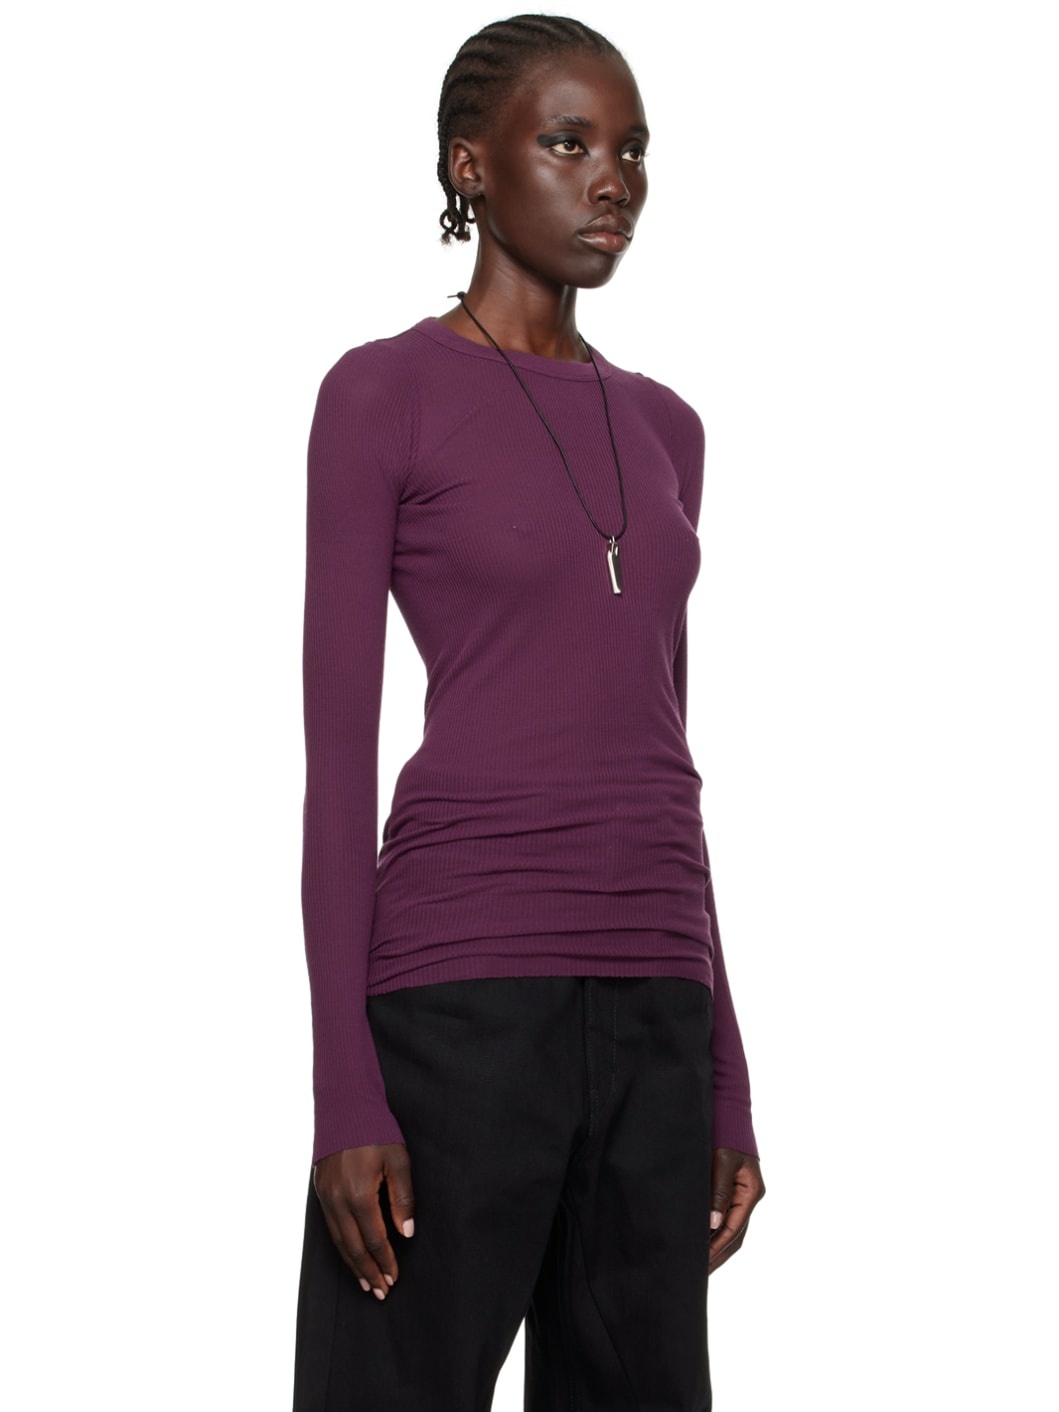 SSENSE Exclusive Purple KEMBRA PFAHLER Edition Long Sleeve T-Shirt - 2